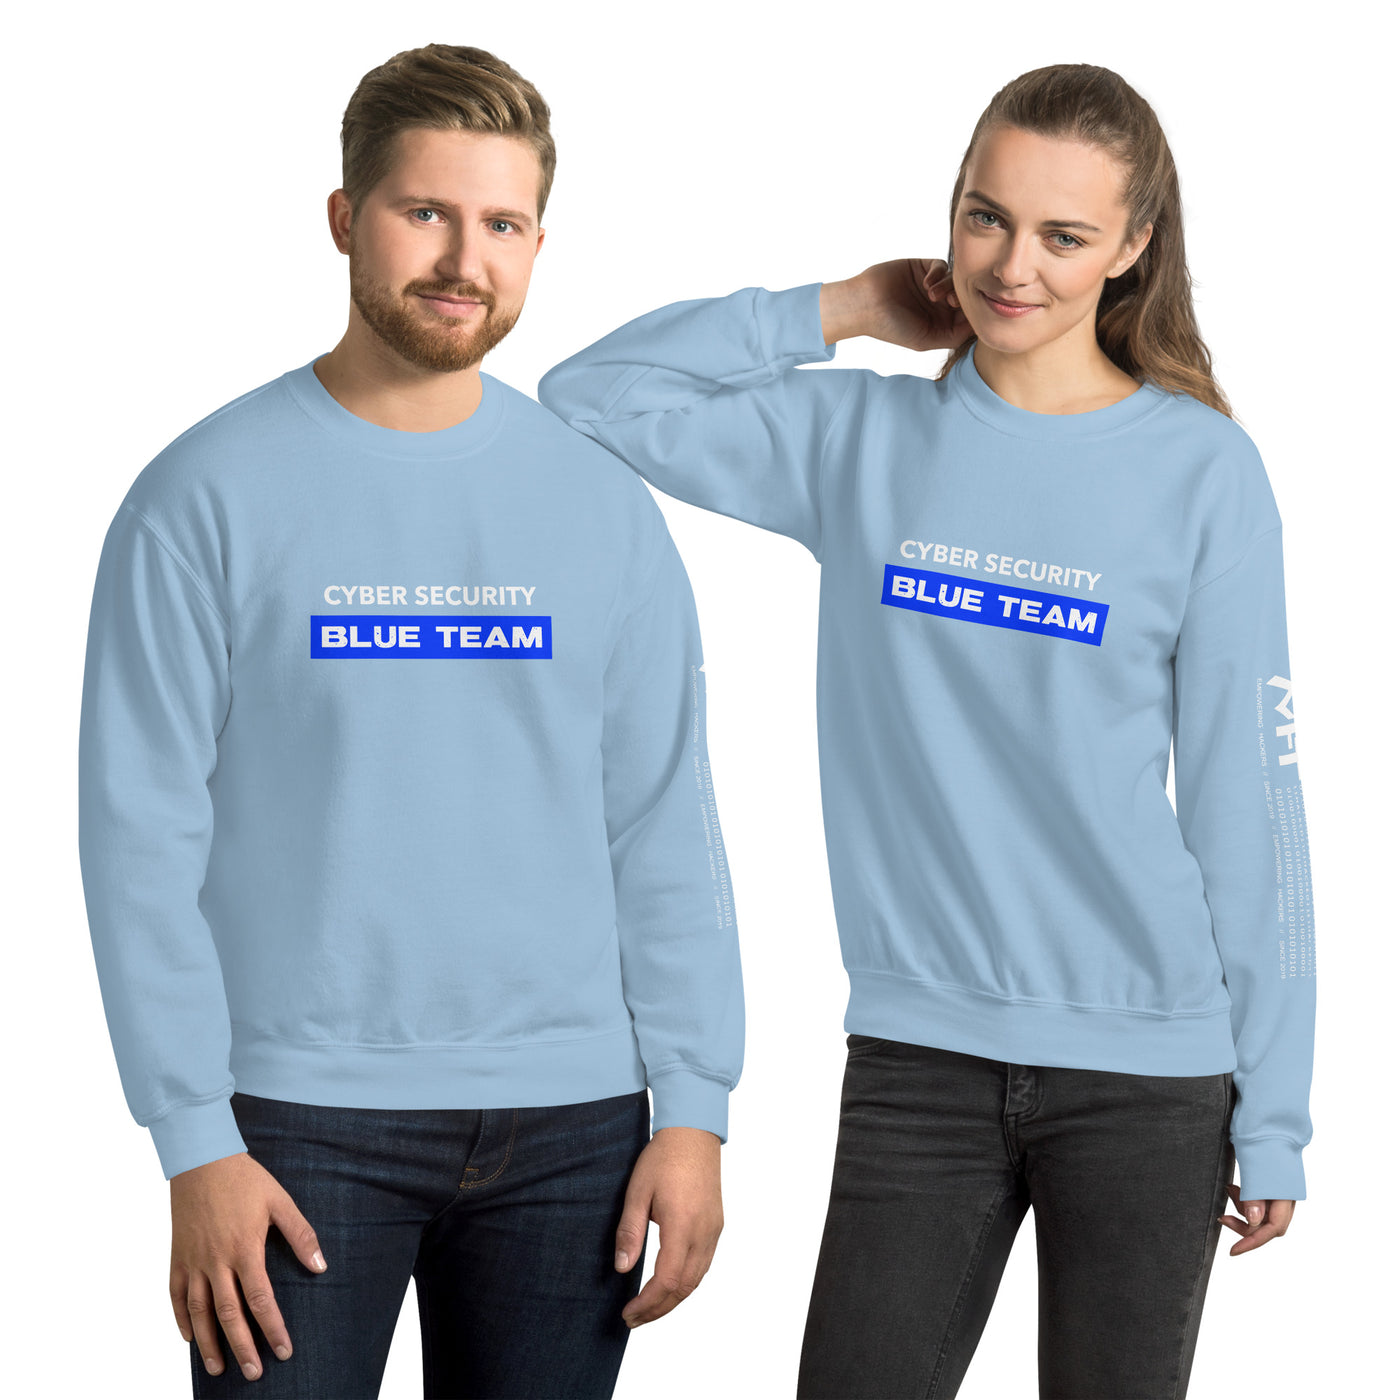 Cyber Security Blue Team V9 - Unisex Sweatshirt